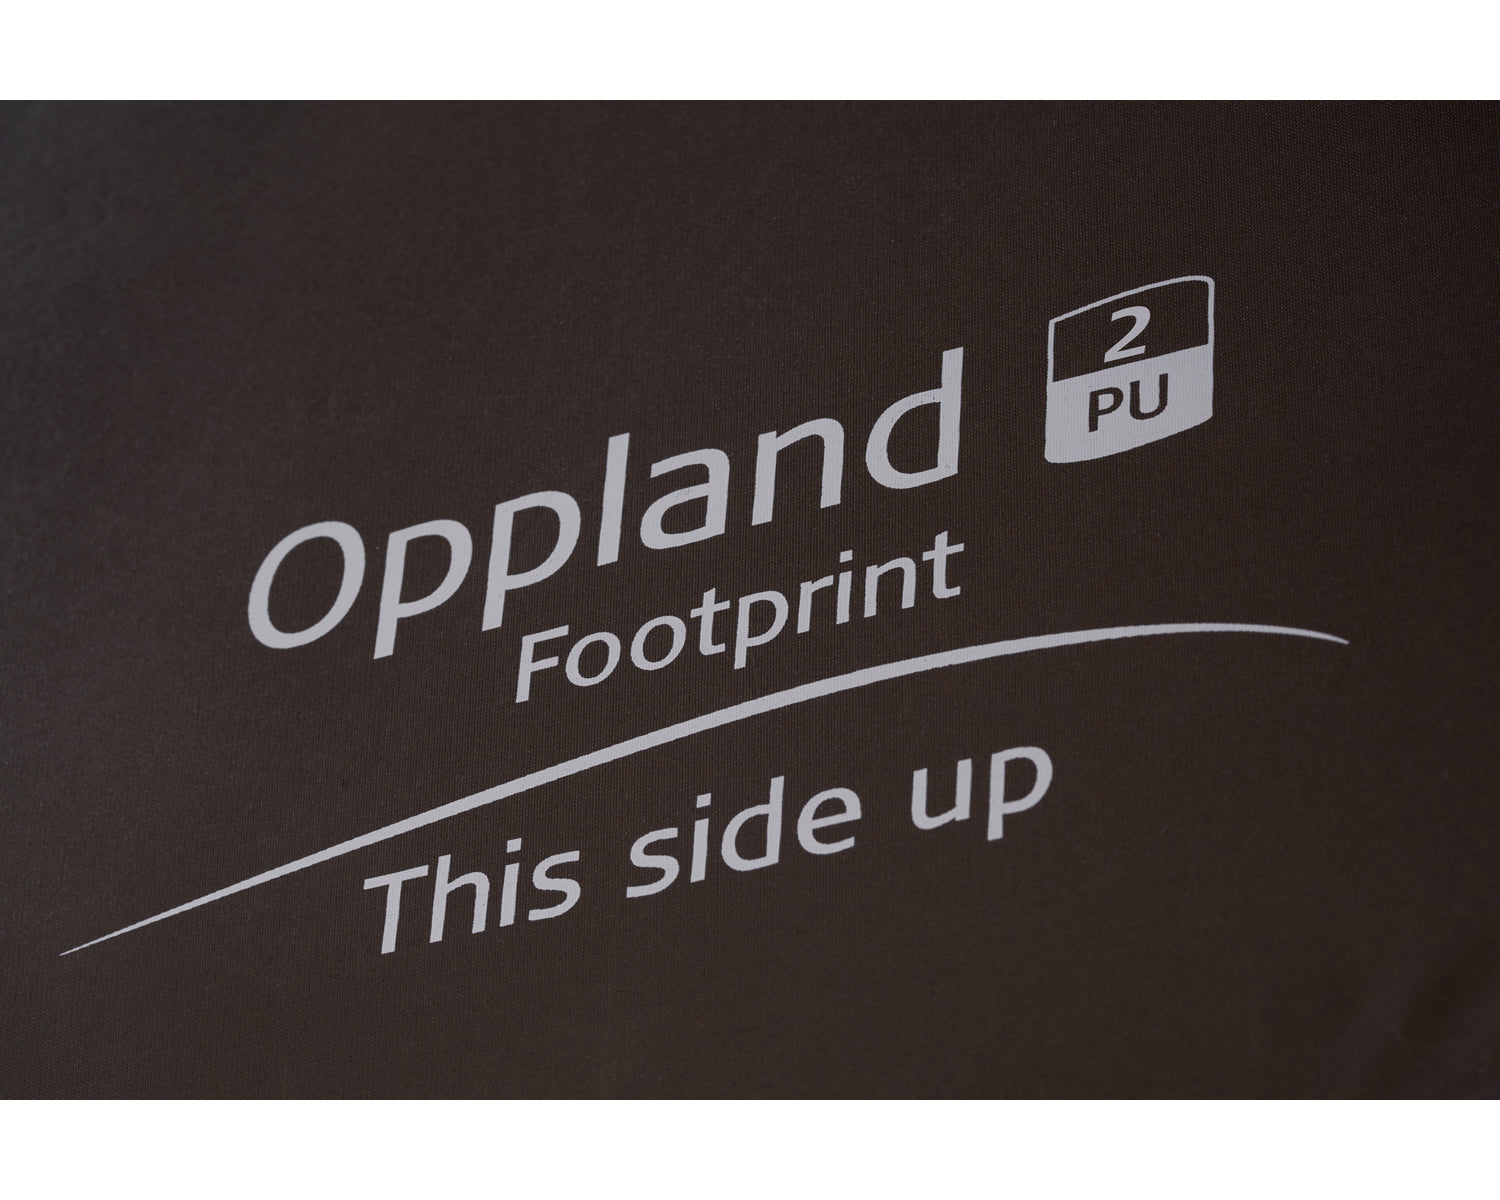 Oppland 2 (2.0) footprint - ONESIZE - Demitasse